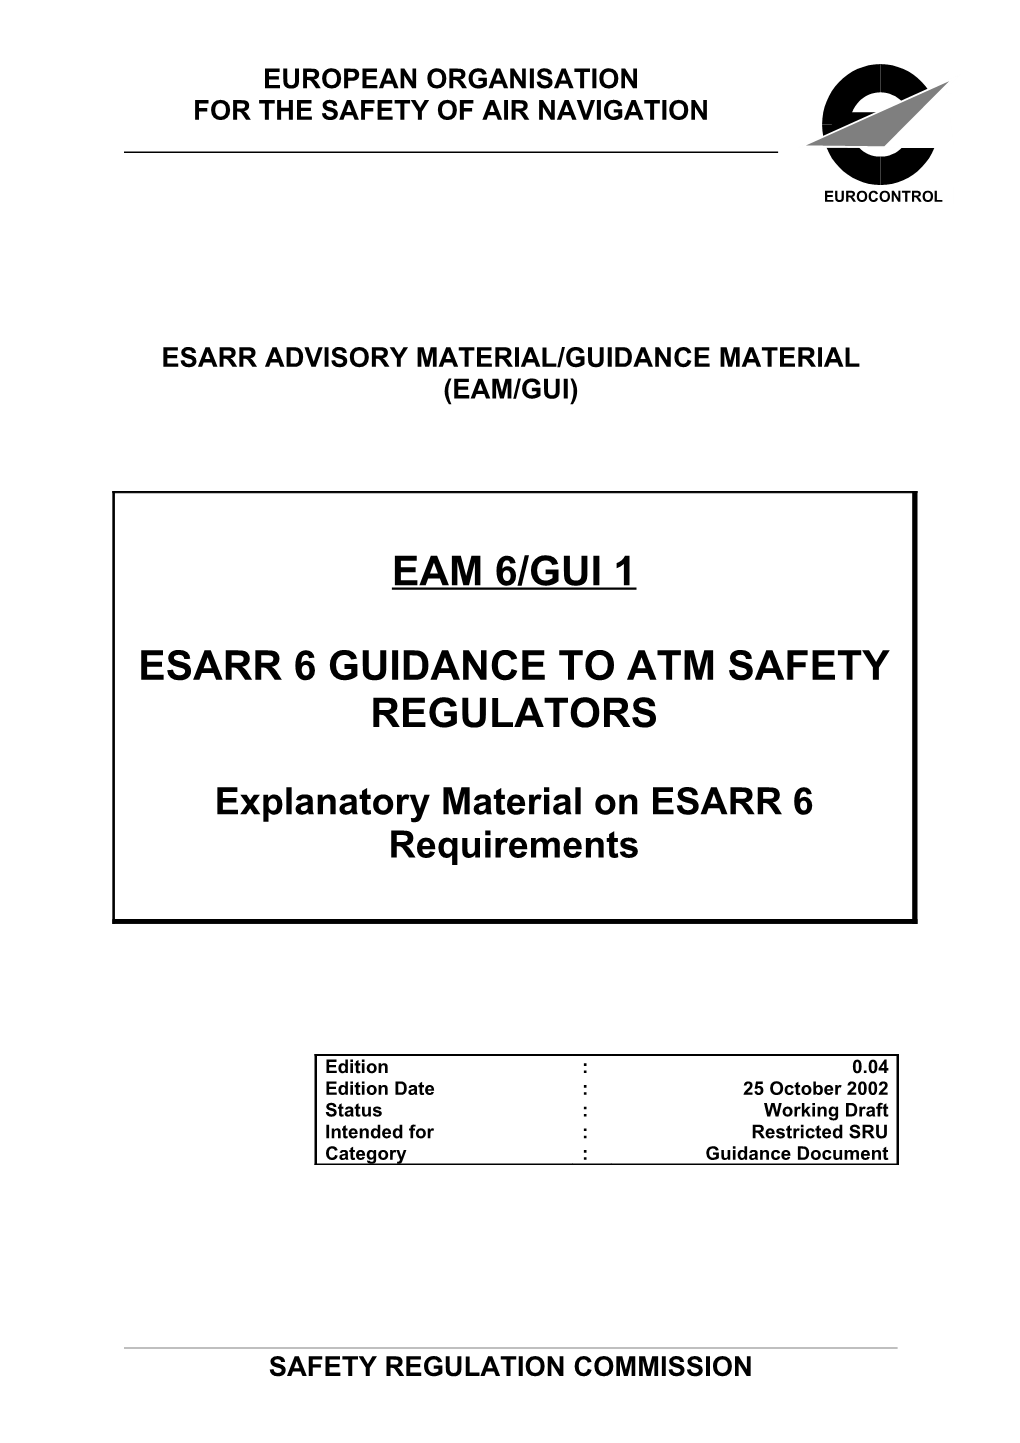 Esarr Advisory Material/Guidance Material